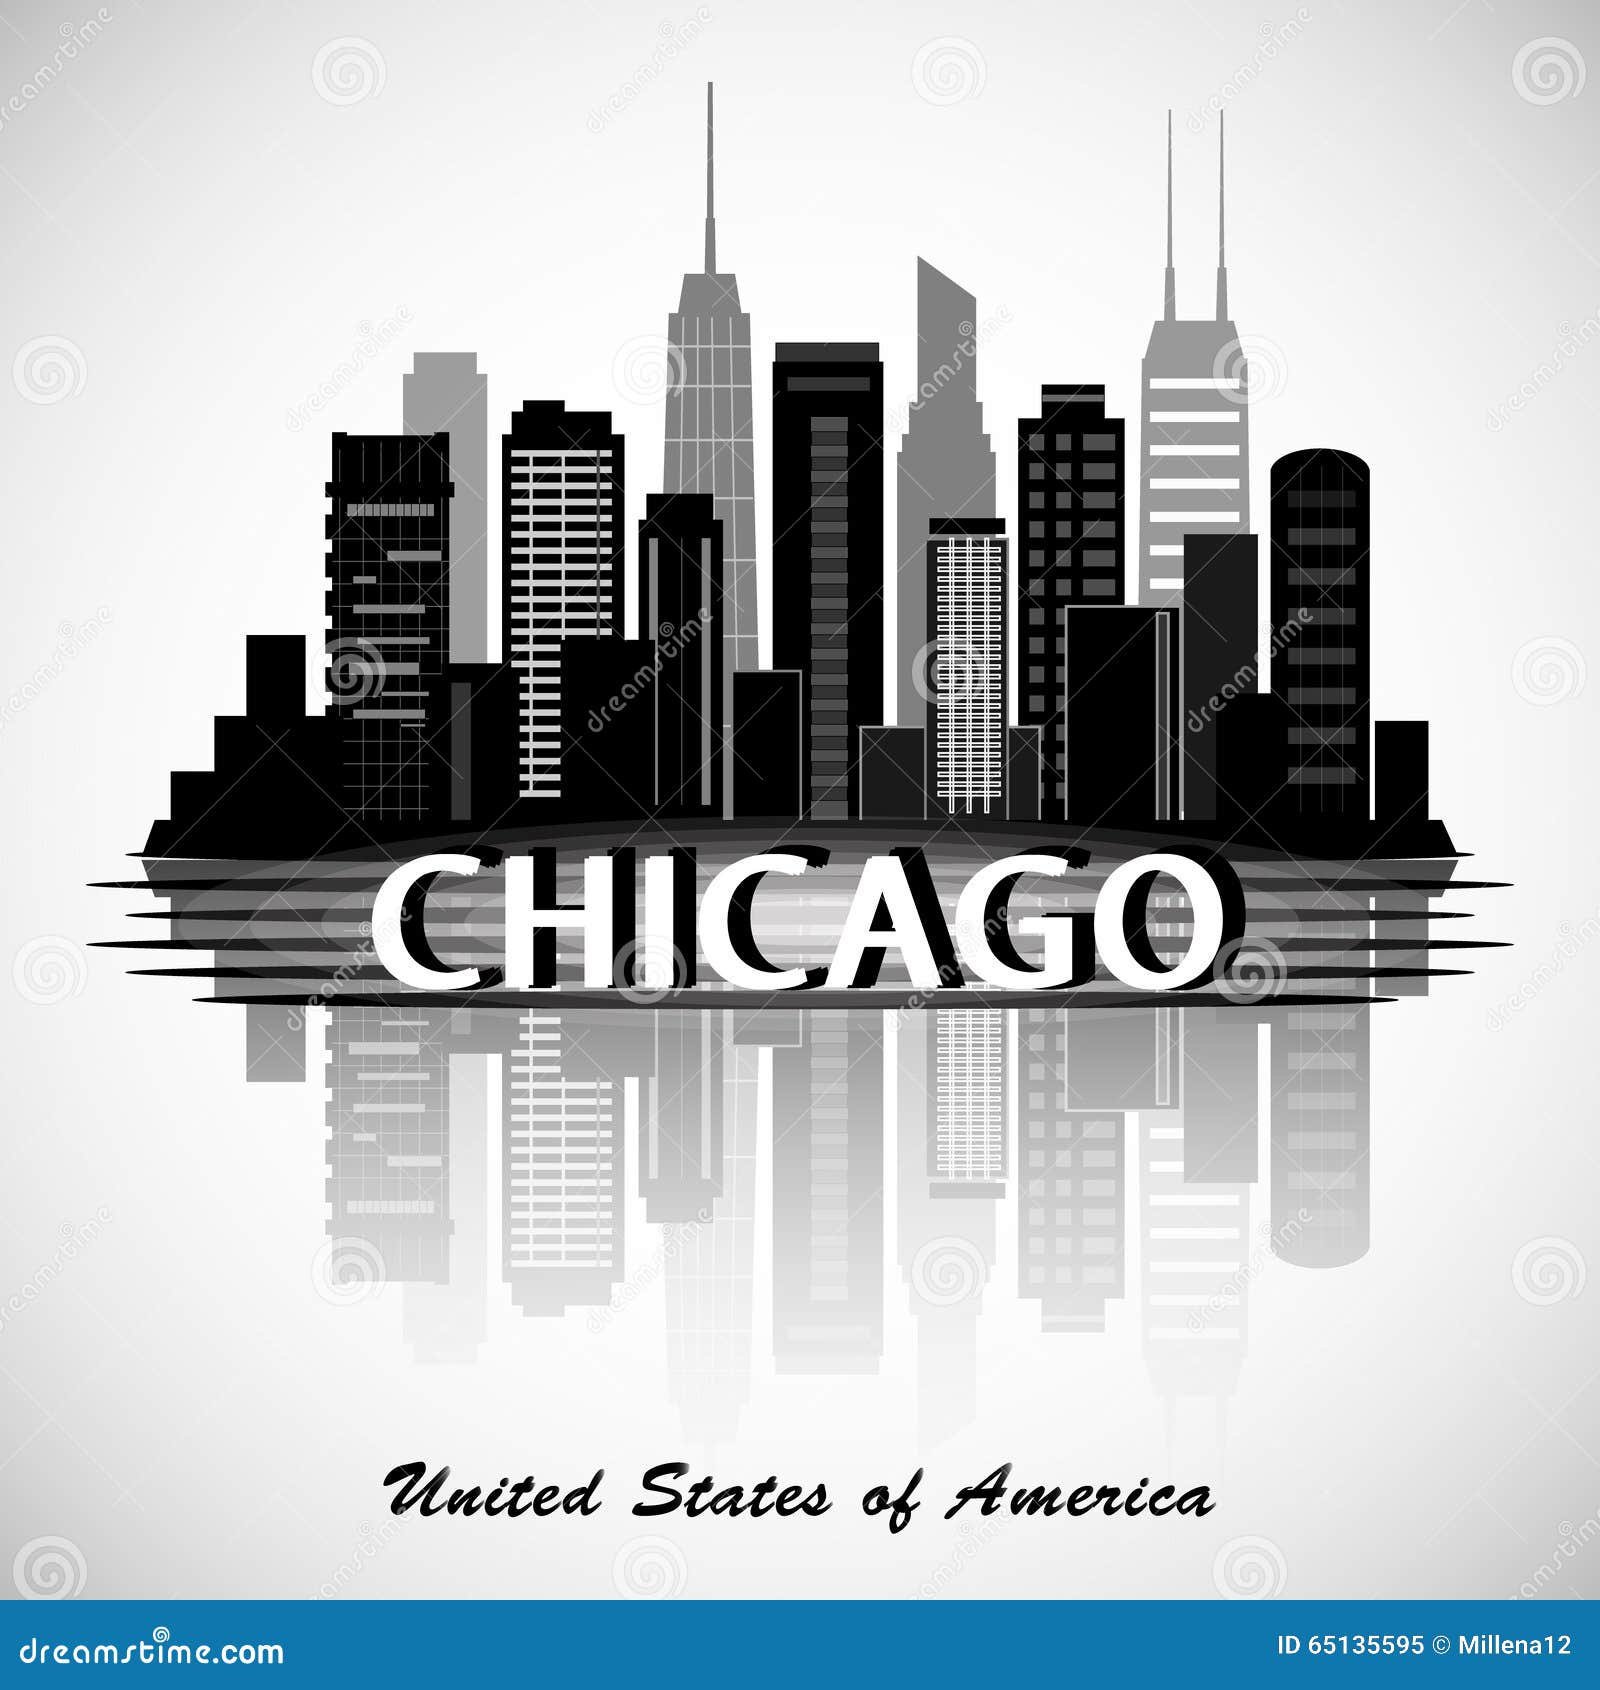 chicago illinois city skyline silhouette. typographic 